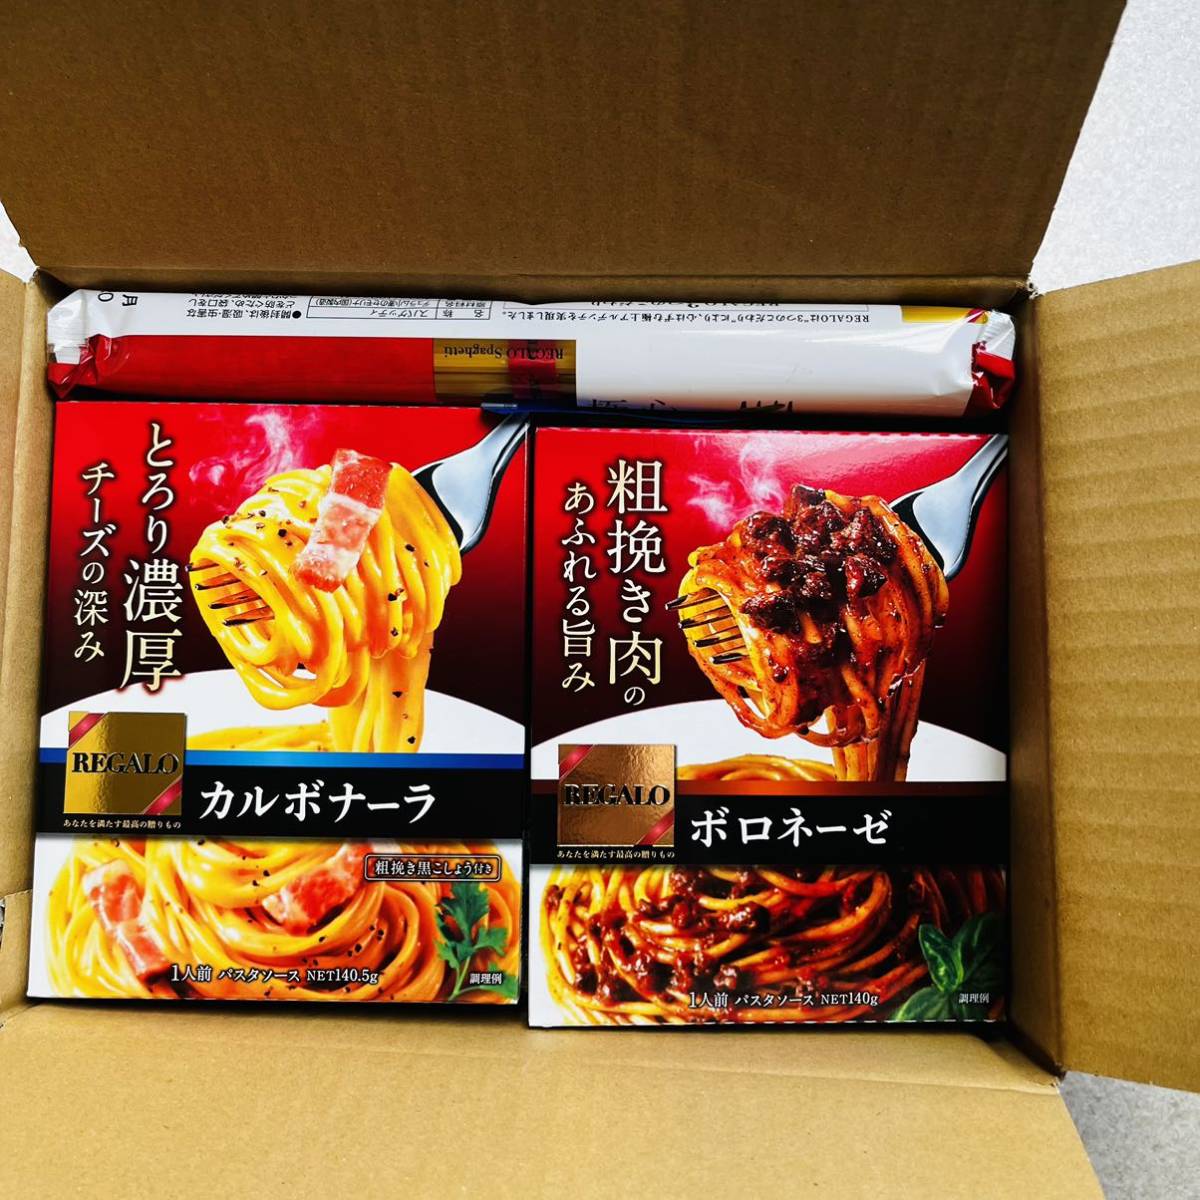 nipn made in Japan flour stockholder hospitality * food ingredients assortment 7 point * wheat flour REGALOspageti pasta sauce ahi-jo. element * prompt decision possible 